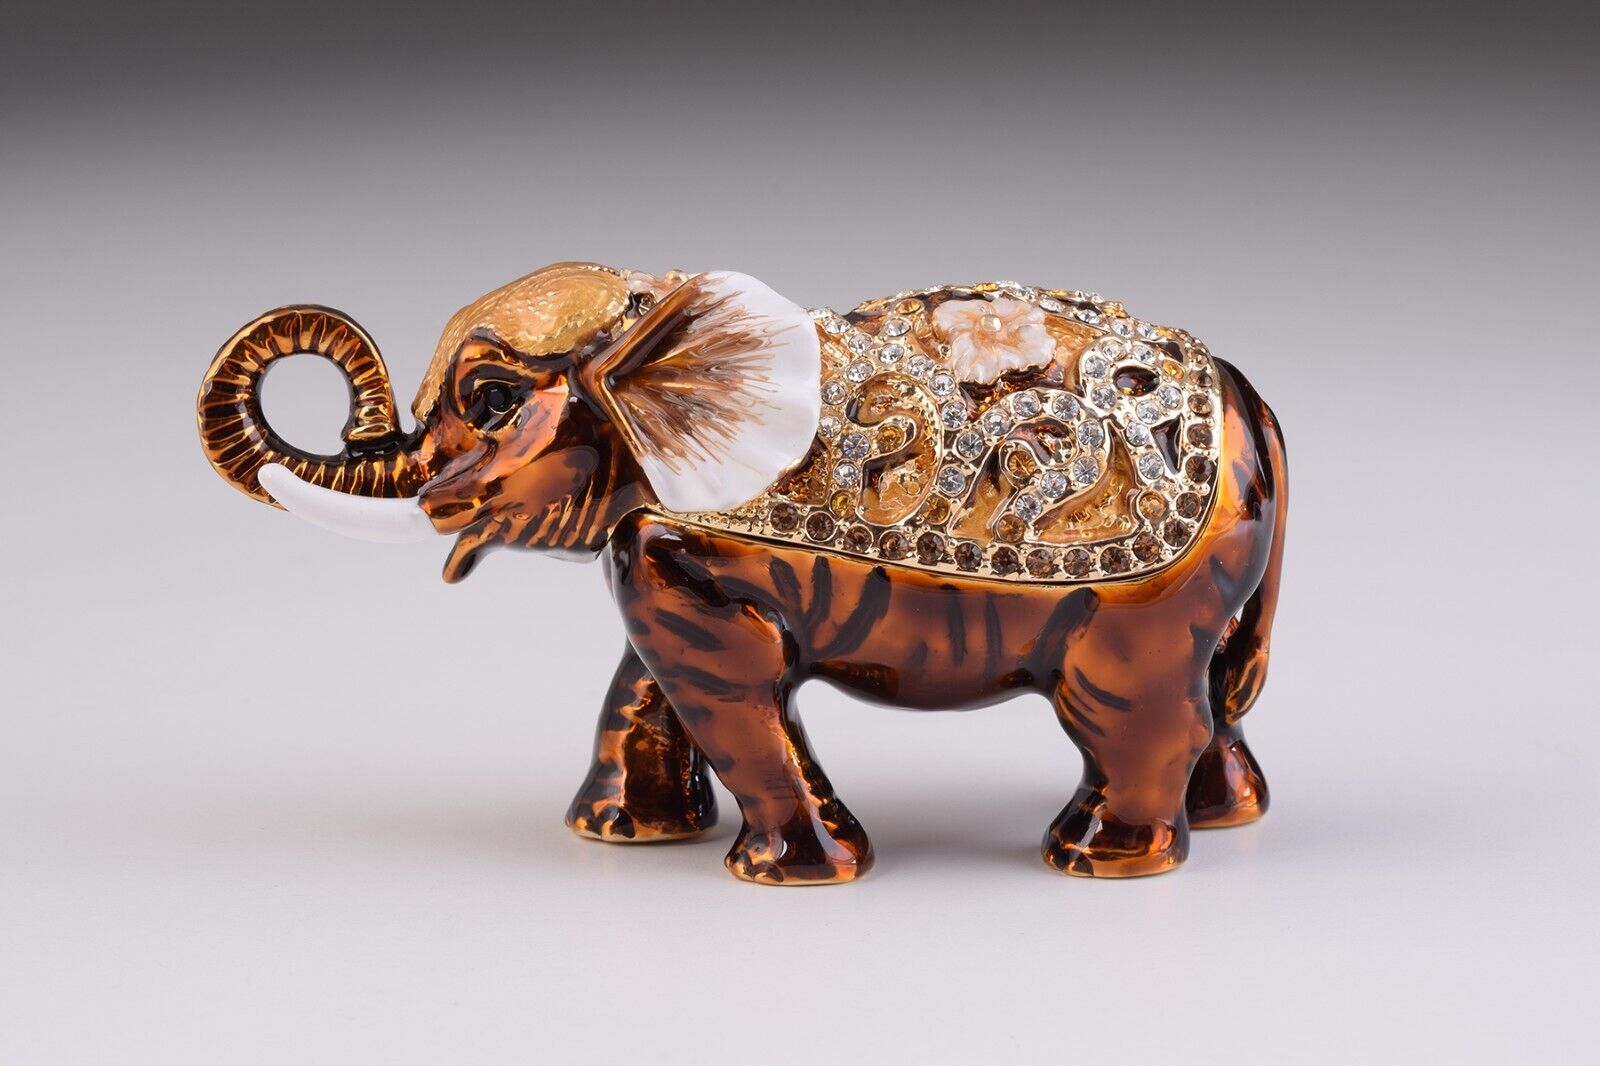 Keren Kopal Elephant Hand made Trinket Box Decorated with Austrian Crystals